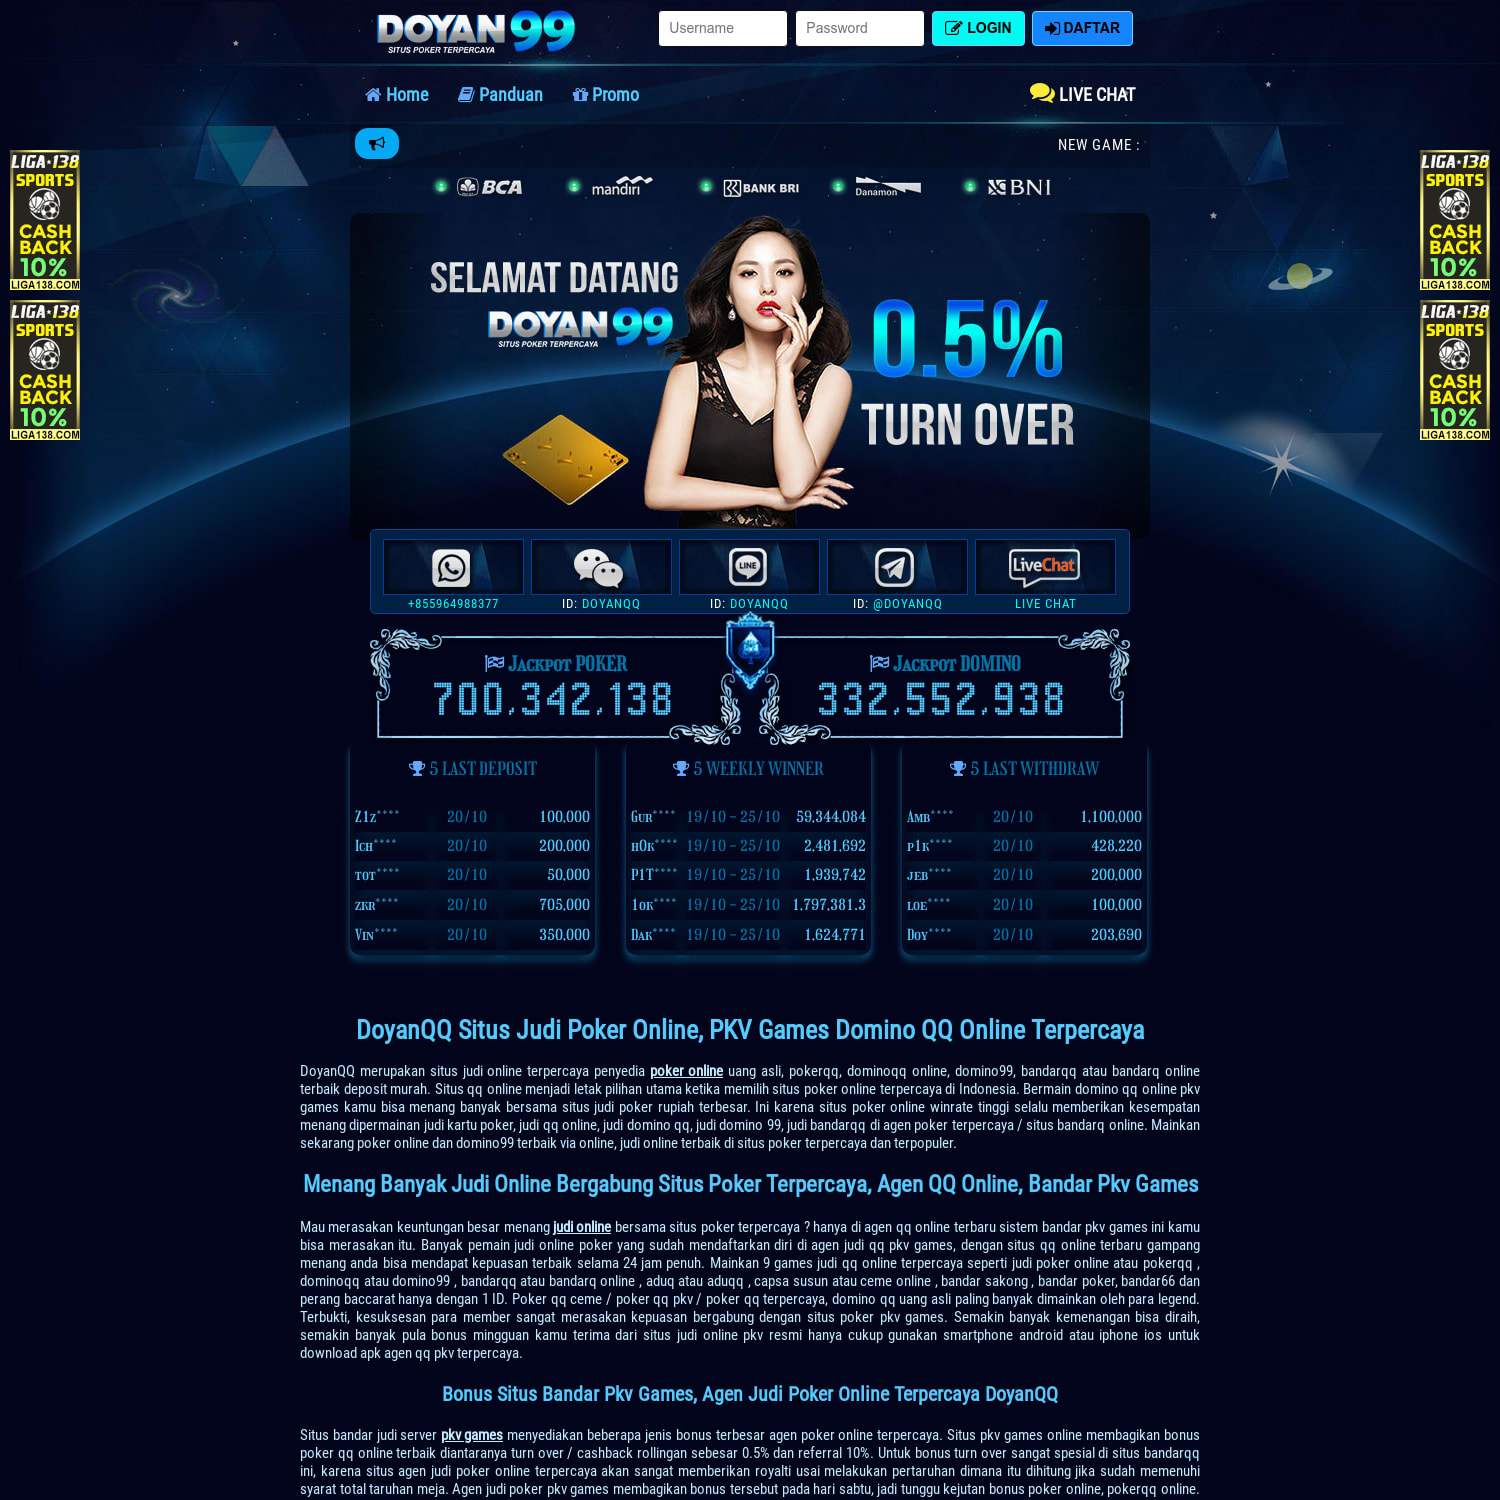 Situs Judi Poker, Domino QQ Online, Pkv Games Terpercaya